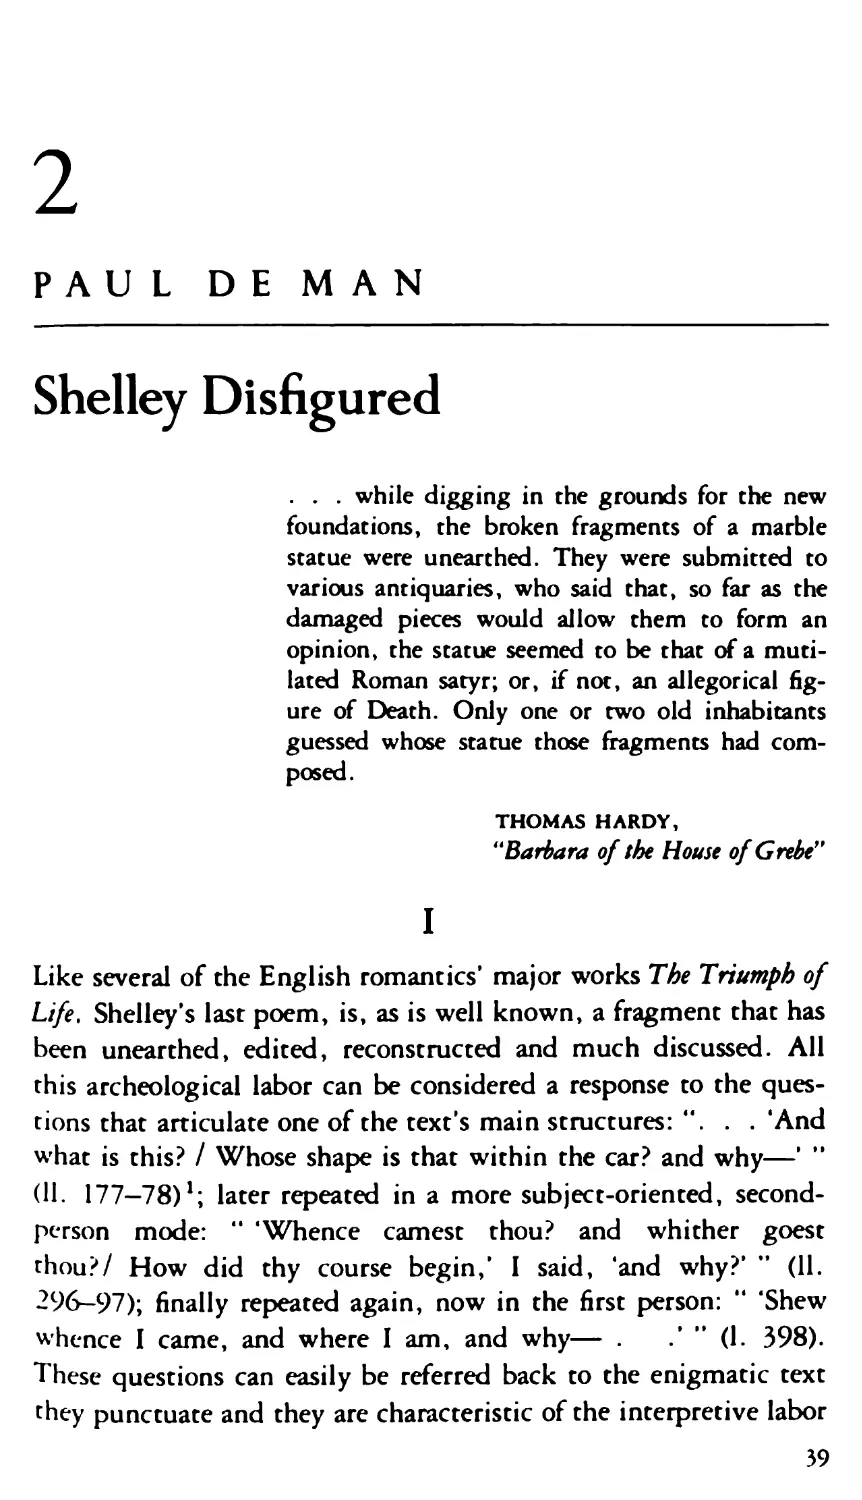 2. Shelley Disfigured. Paul de Man